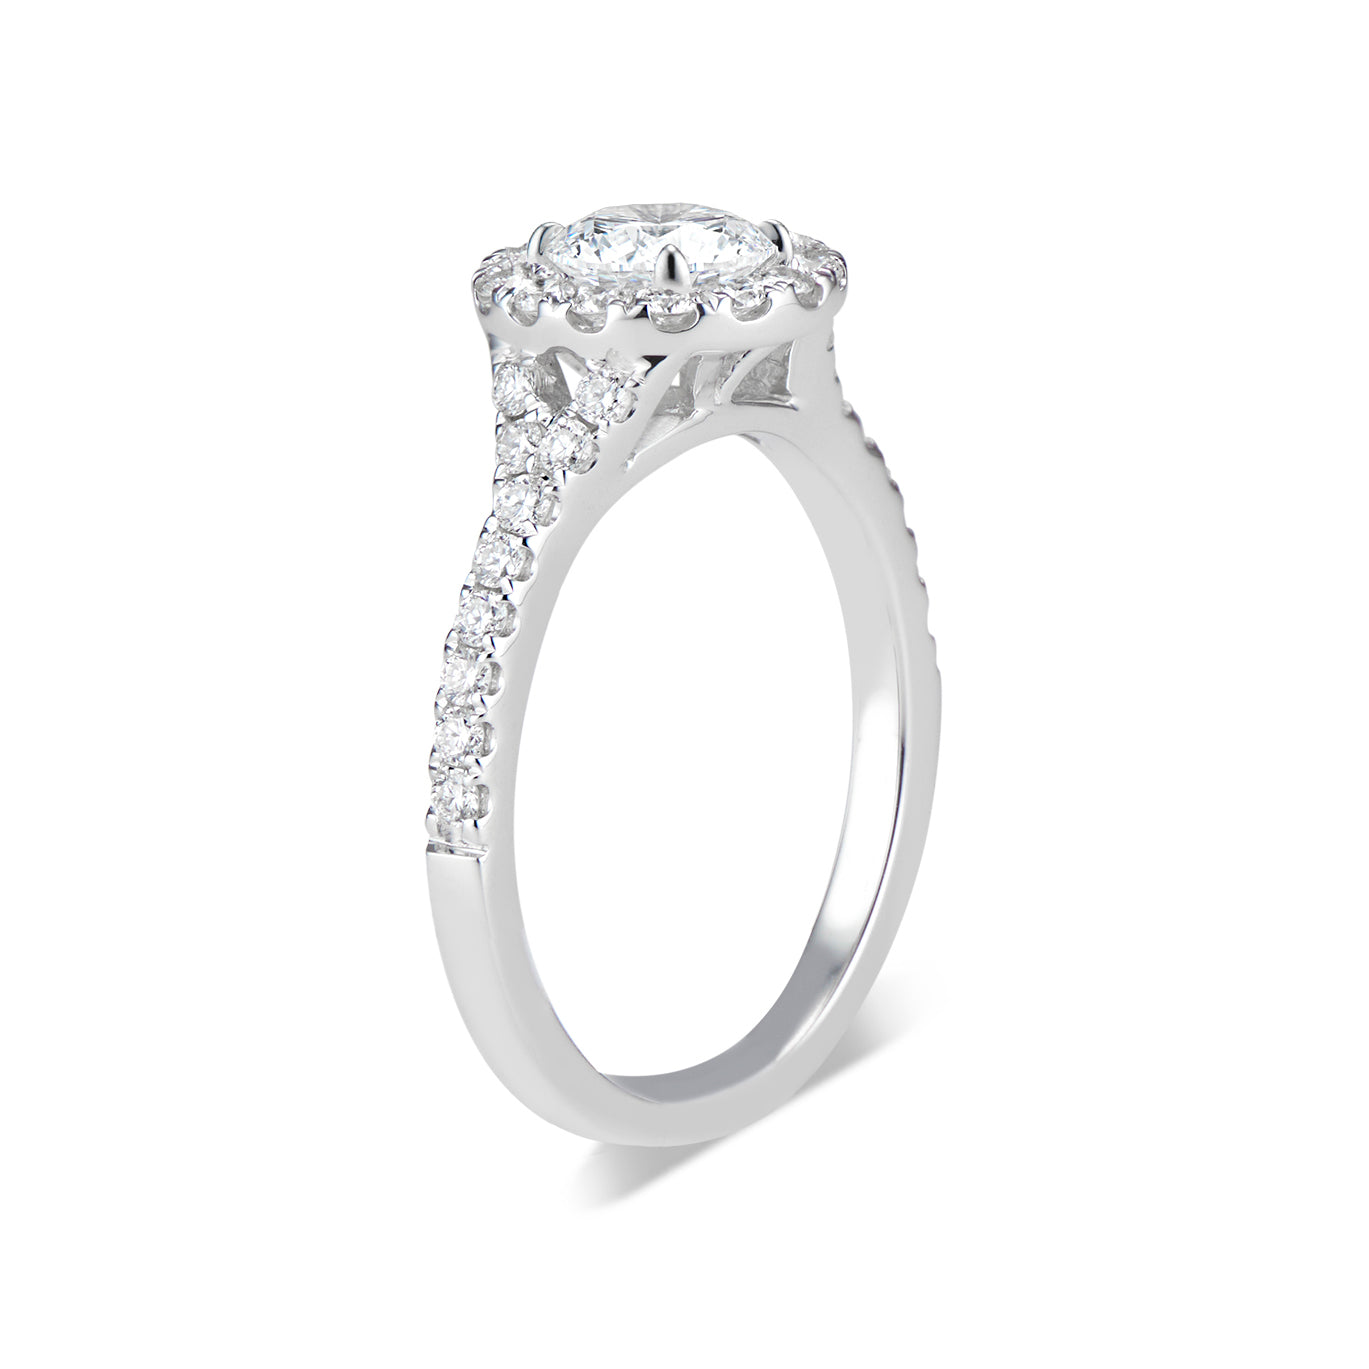 Round Halo Diamond Engagement Ring  -18K weighting 3.73 GR  - 34 round diamonds totaling 0.48 carats